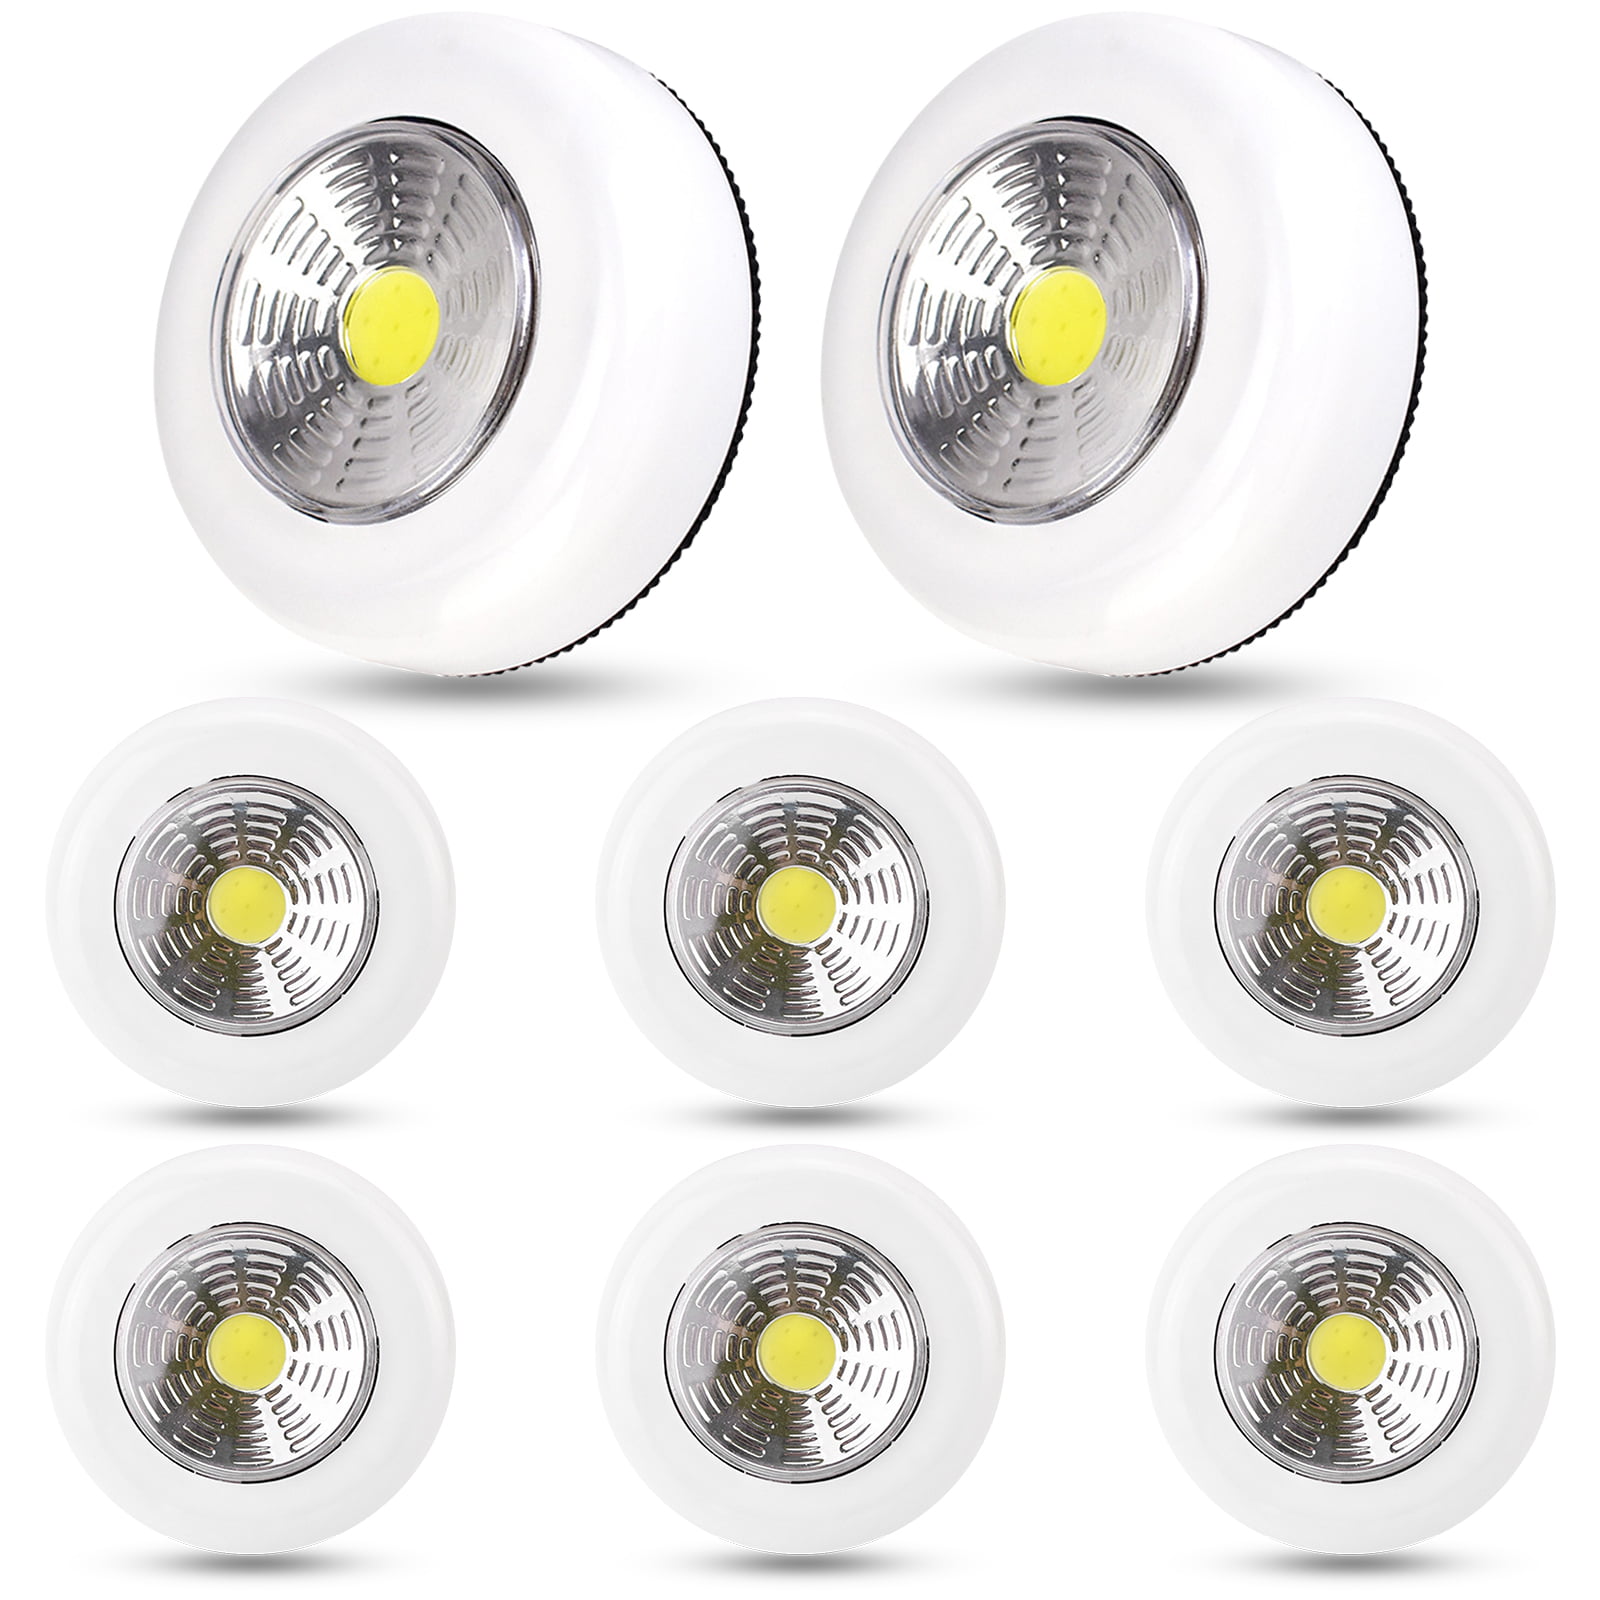 1/2/4pcs LED Night Light COB LED Cordless Switch Wall Battery Moon Lamp Premium 